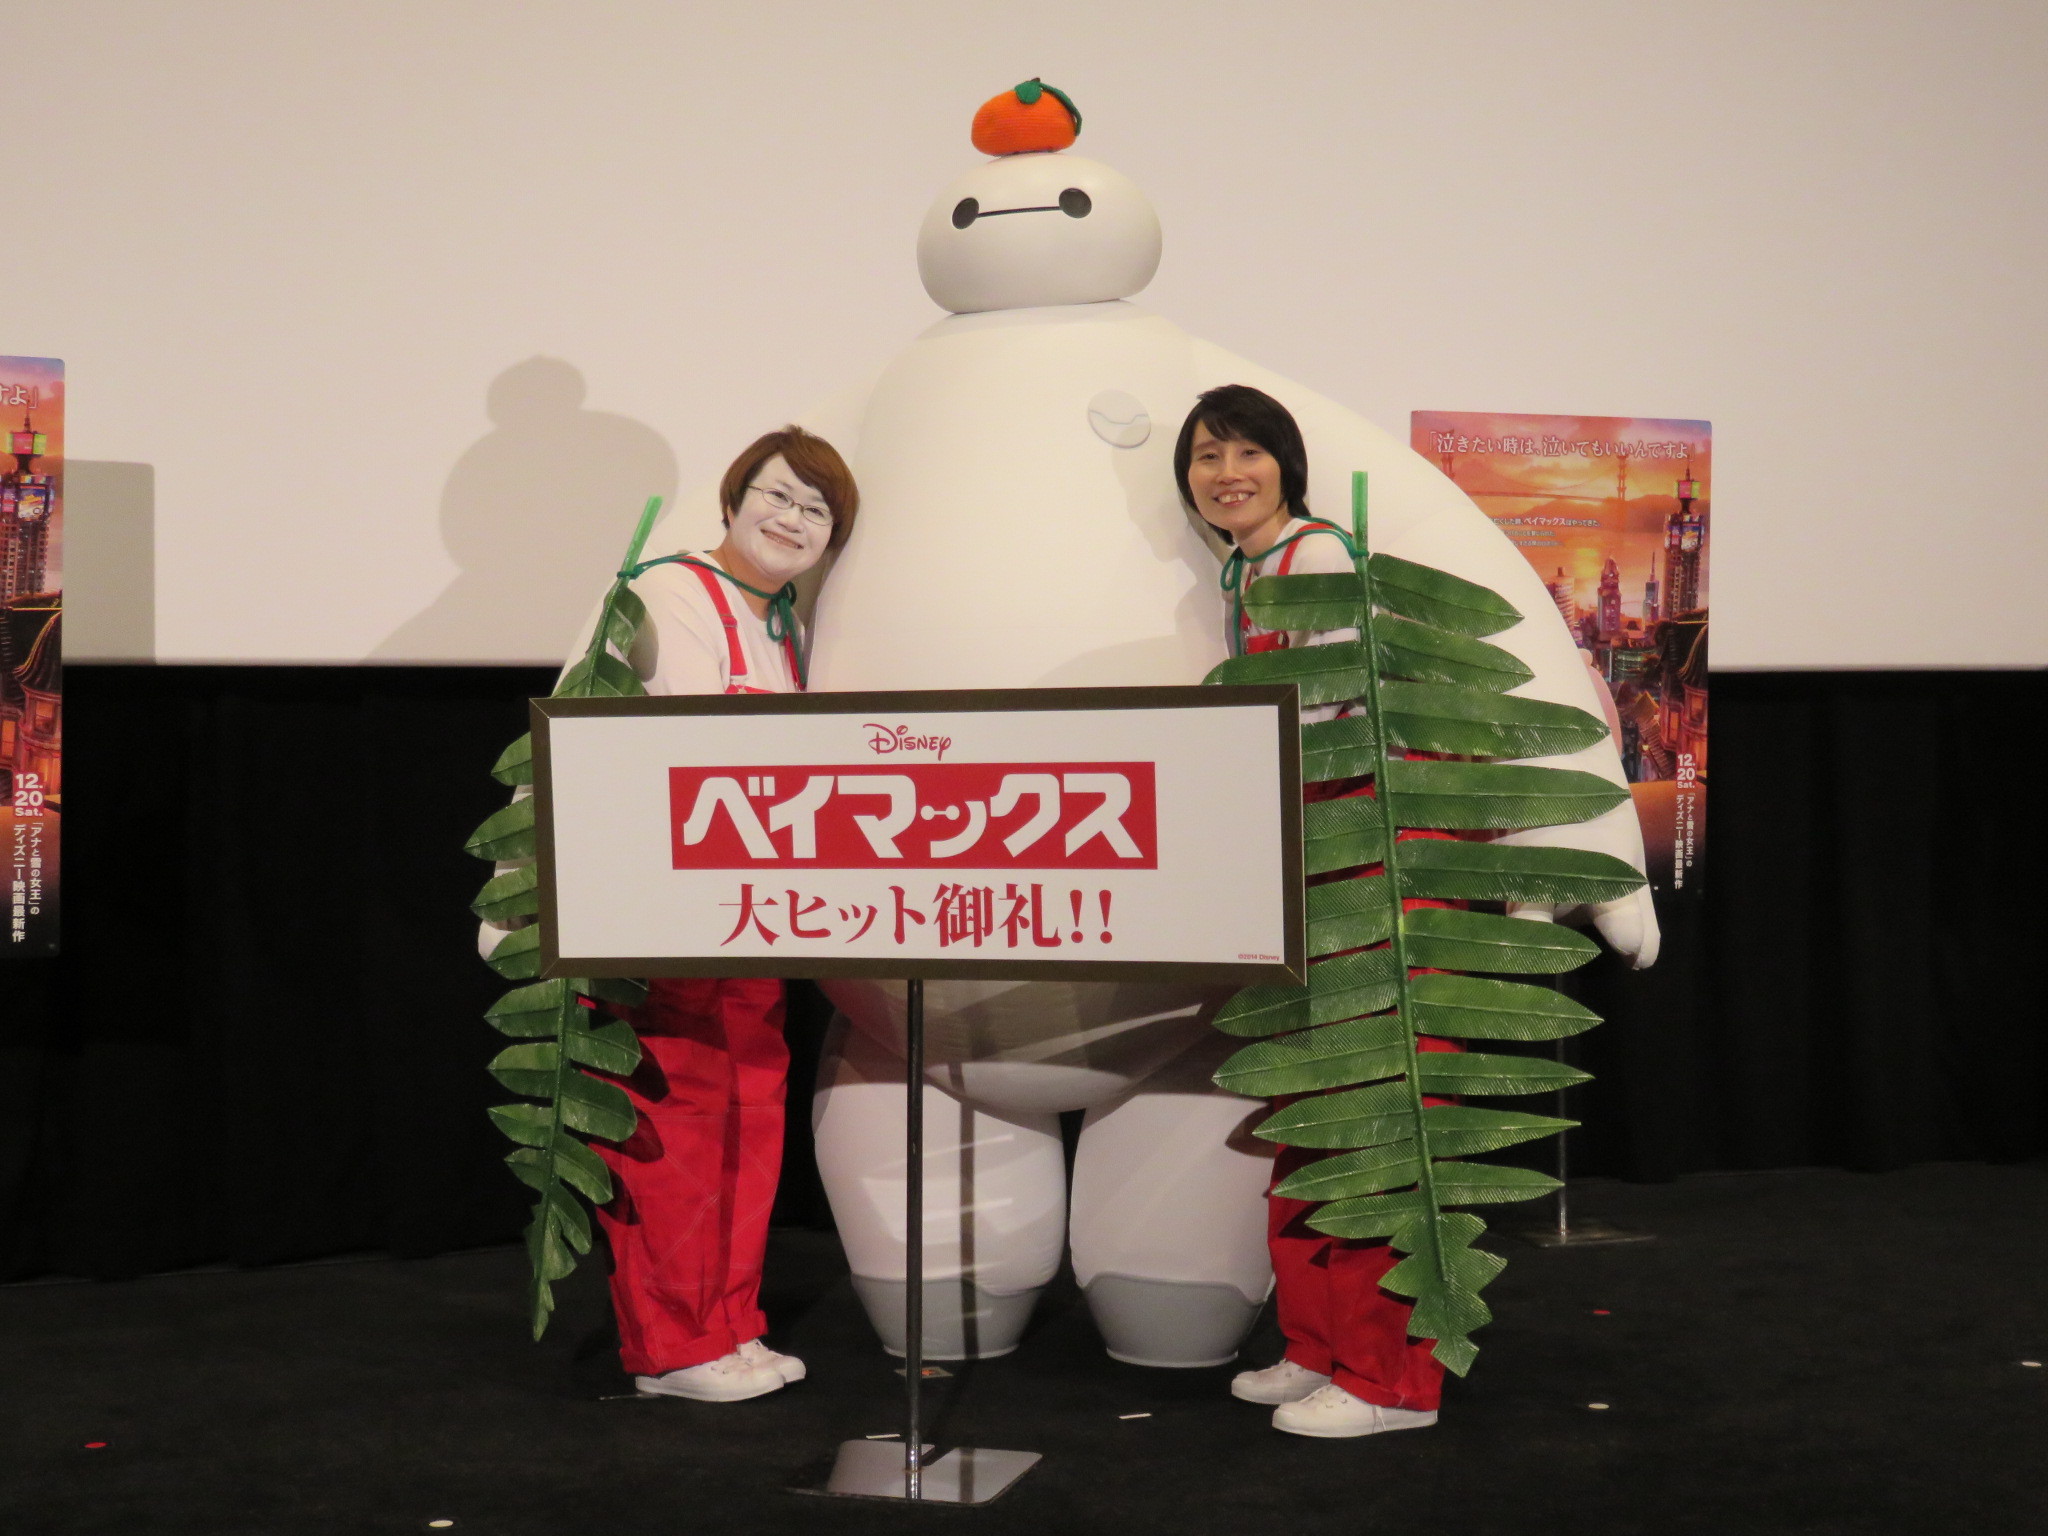 http://news.yoshimoto.co.jp/photos/uncategorized/2014/12/25/20141225234038-89f373d0ac6a7af726d7fc7b5836aec1bada0bfb.jpg